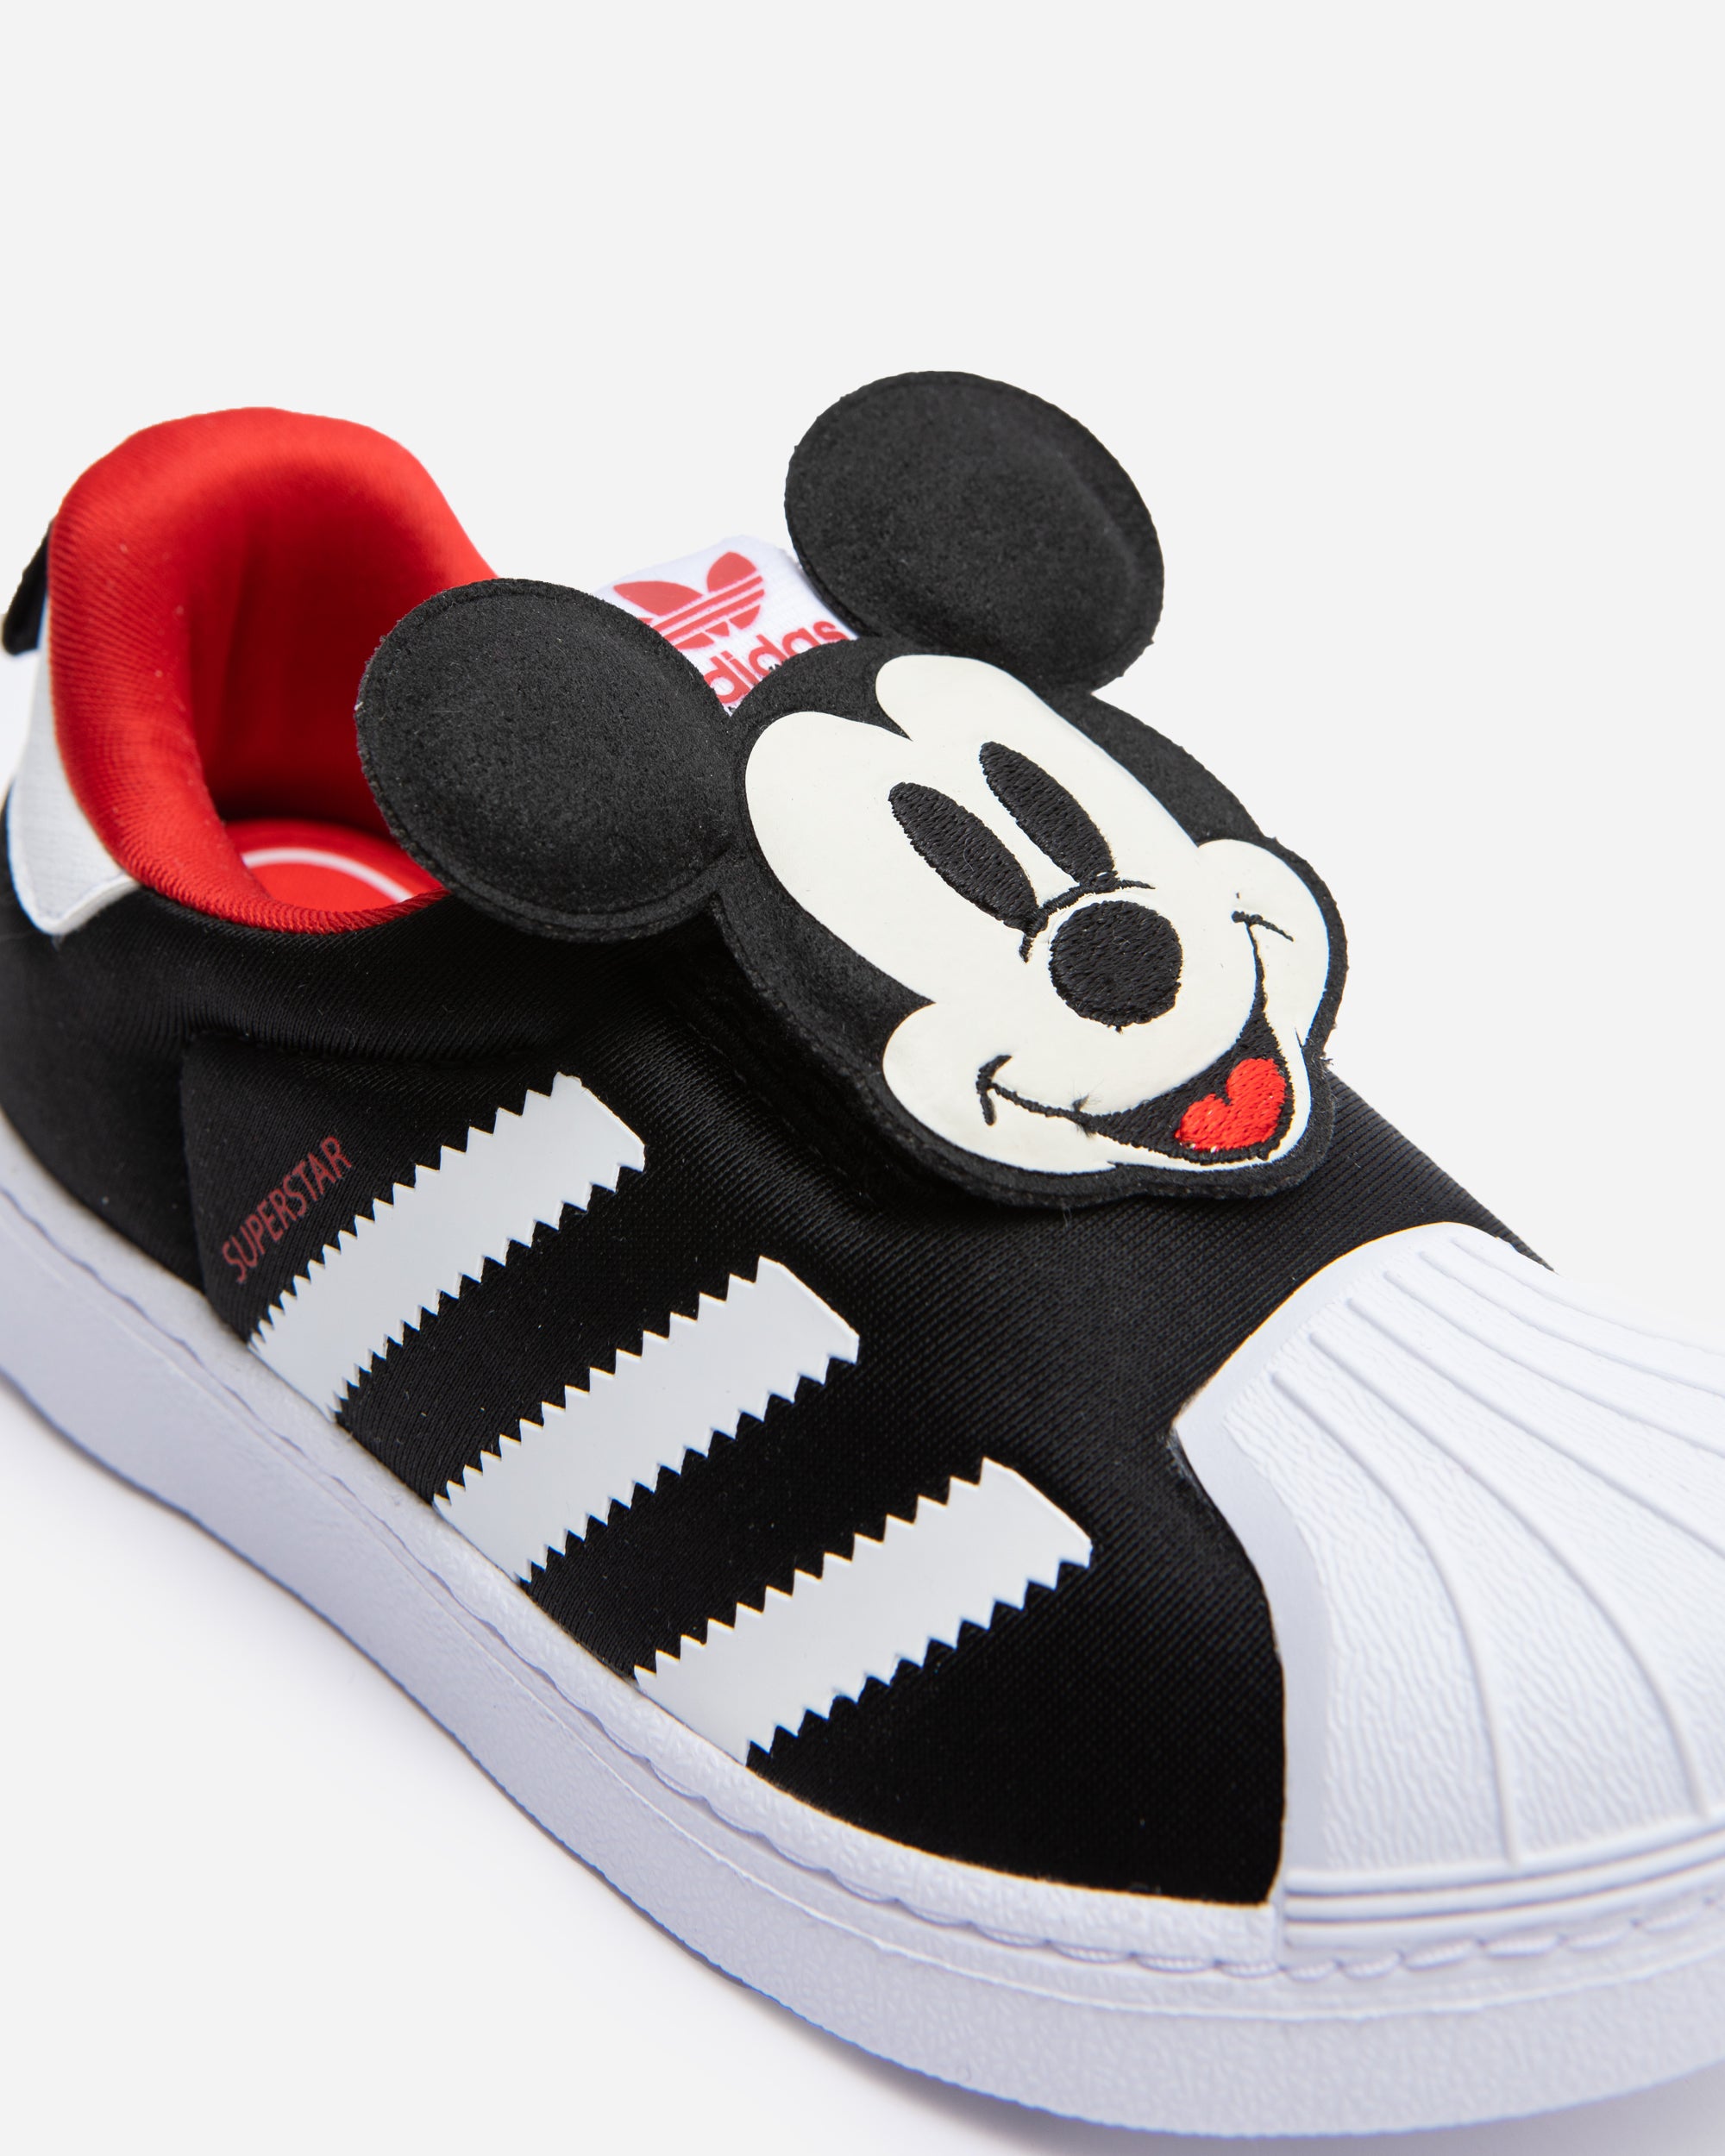 Adidas Ori Superstar 360 (Toddler) Core Black/White/Red Q46305